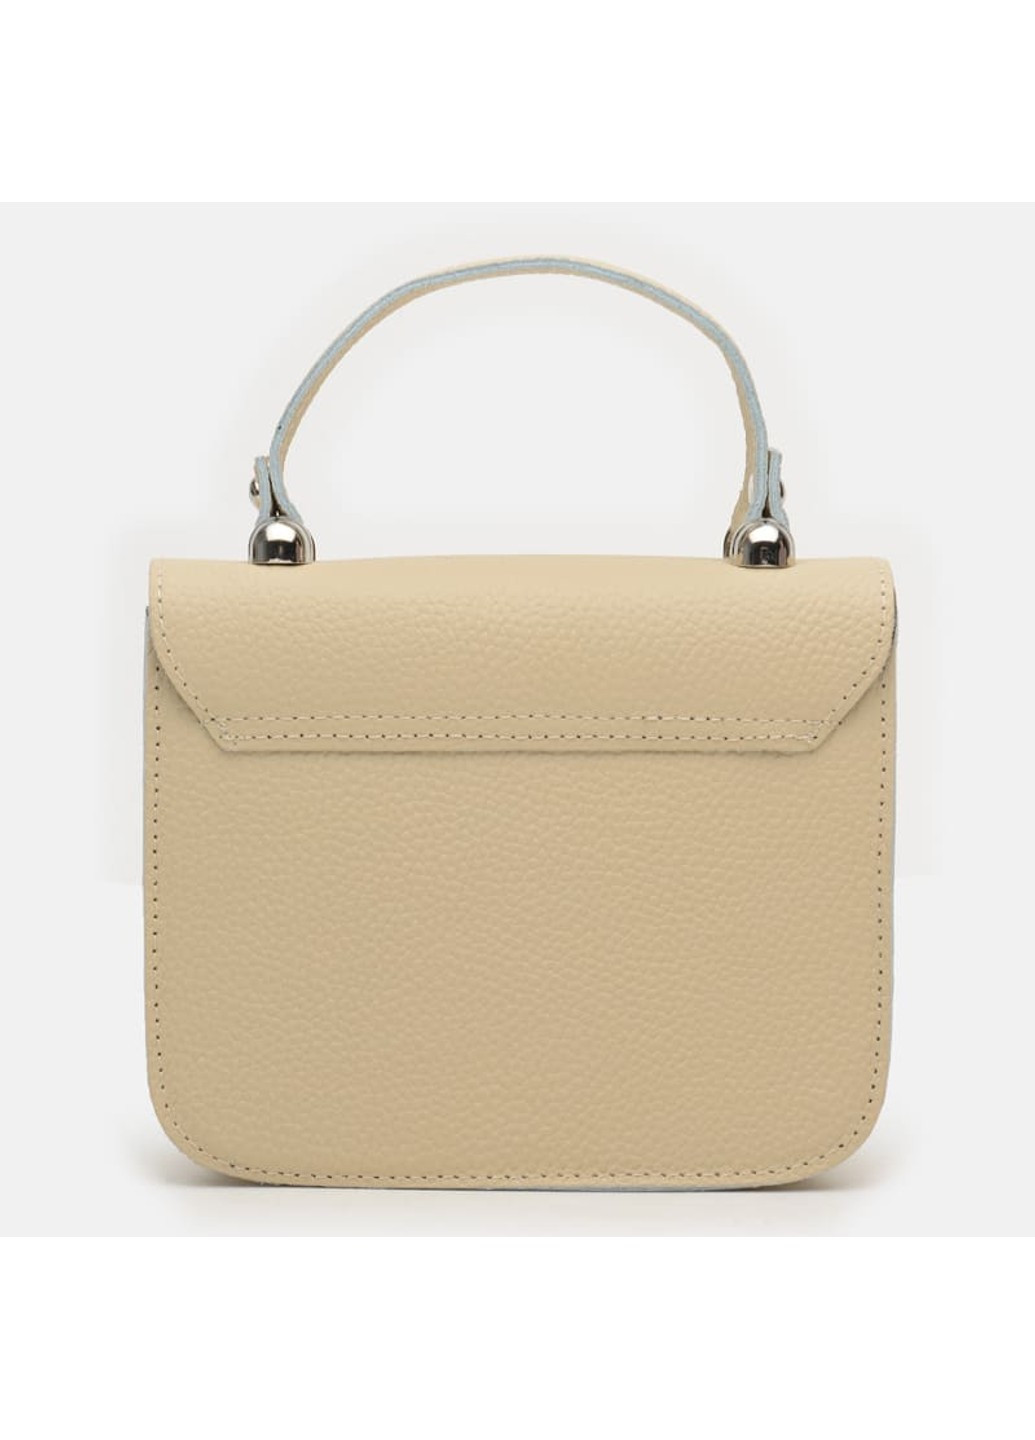 Женская кожаная сумка 1l623-beige Ricco Grande (266143587)